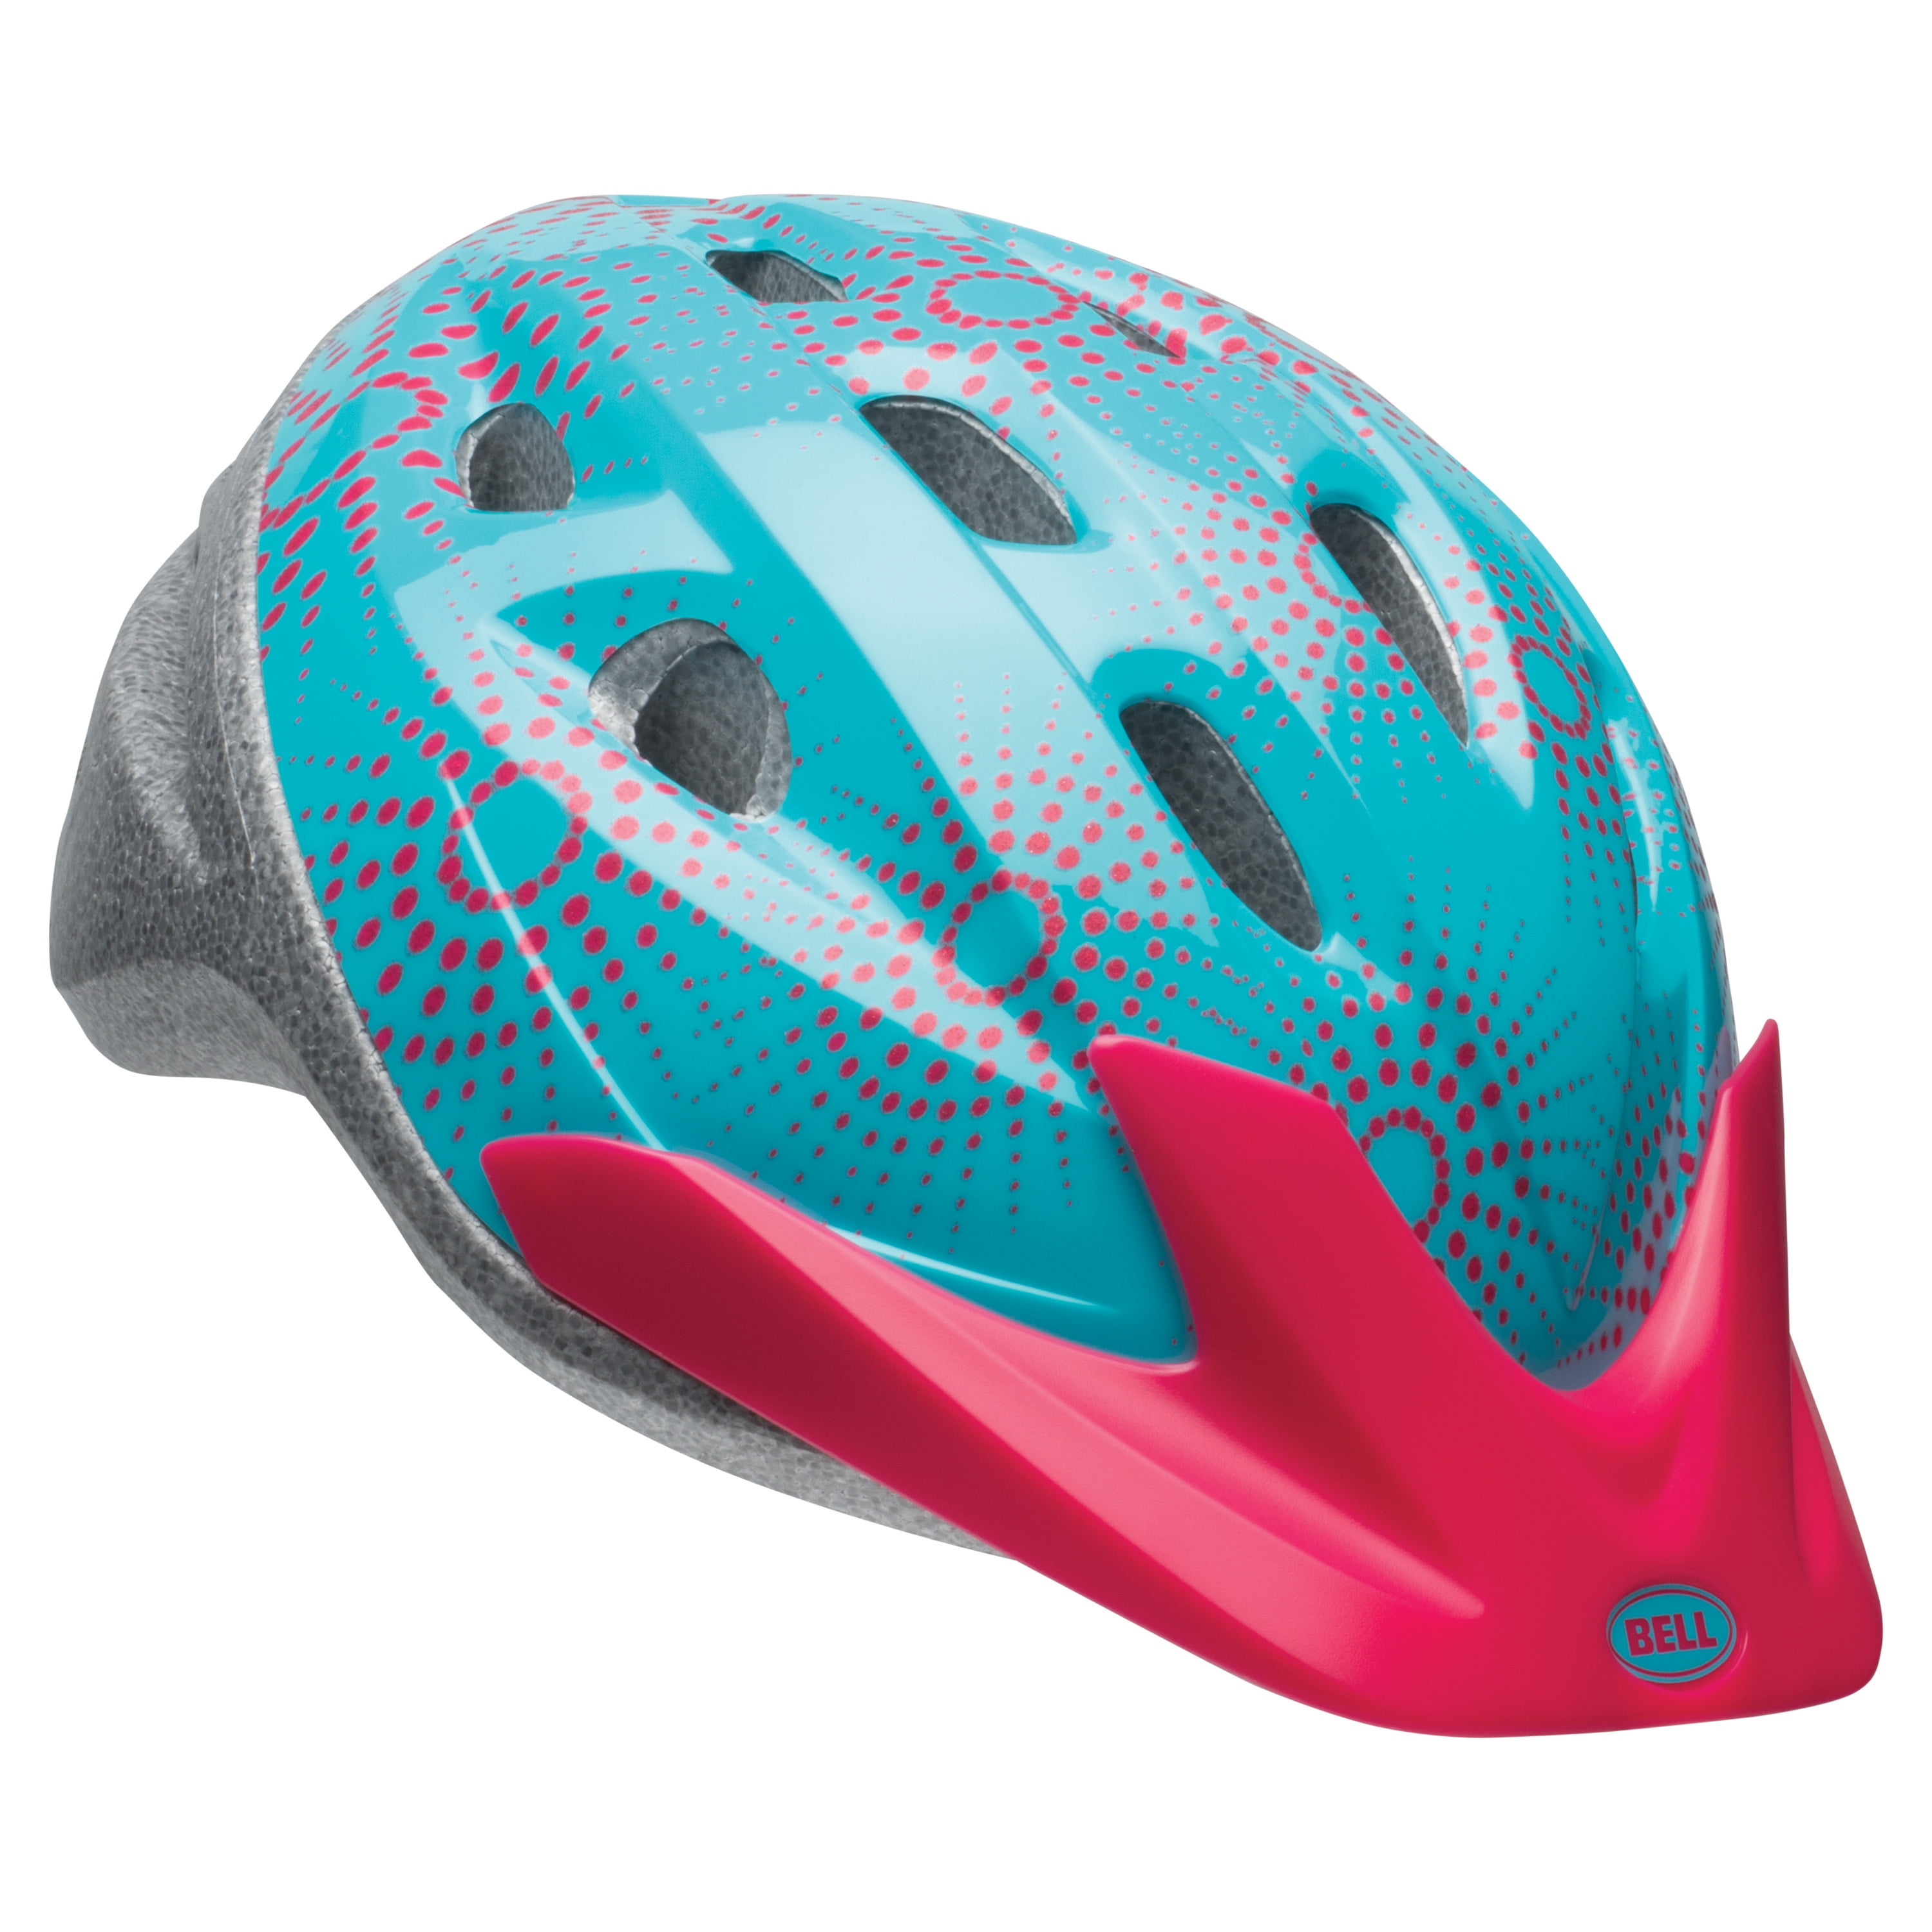 Schwinn Breeze Blue & Red Youth Bike Comfortable Helmet New FREE SHIPPING 